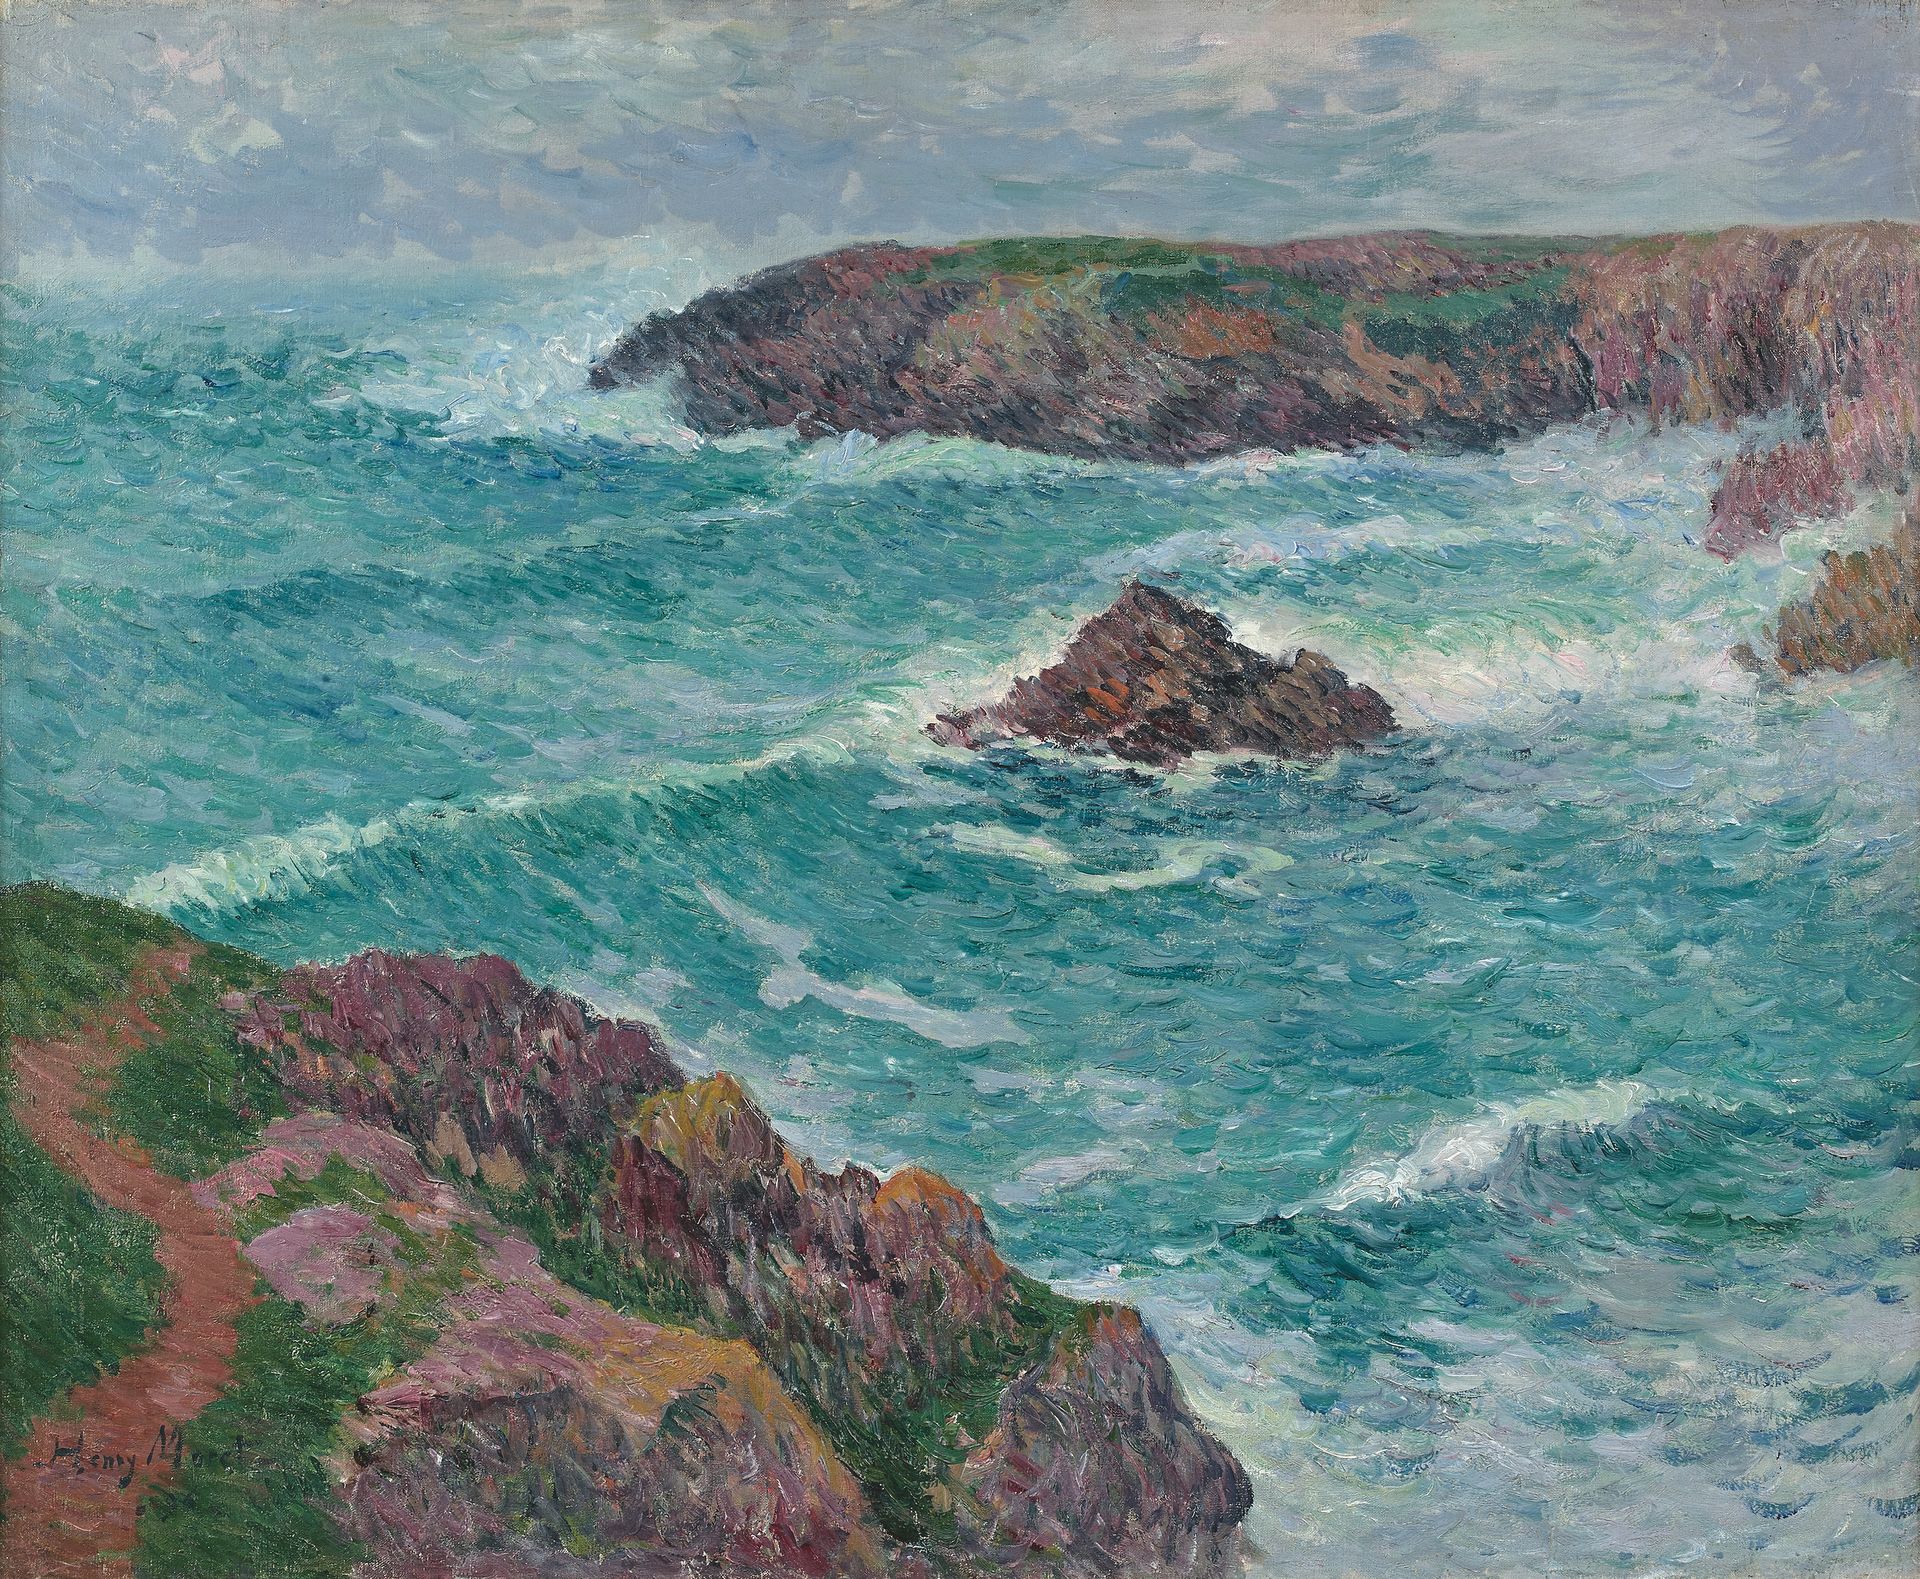 Henry MORET (1856-1913) Groix, la houle et le chemin rose, 1896
布面油画，左下角有签名和日期96&hellip;